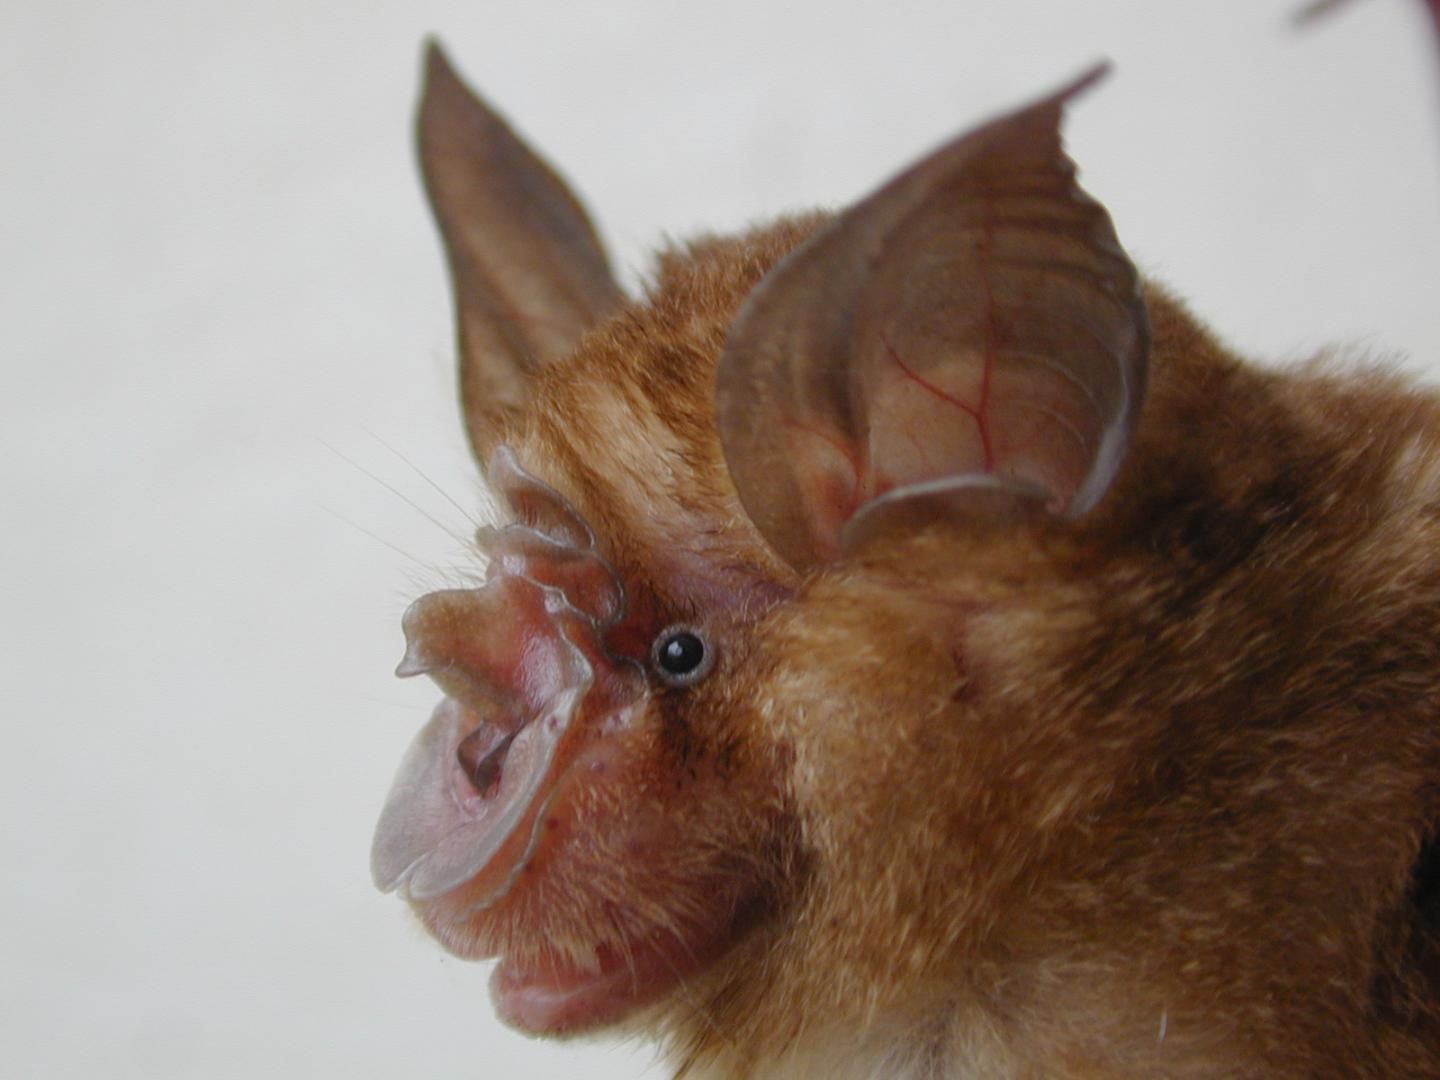 Bat Cave Study Sheds New Light on Origin of SARS Virus